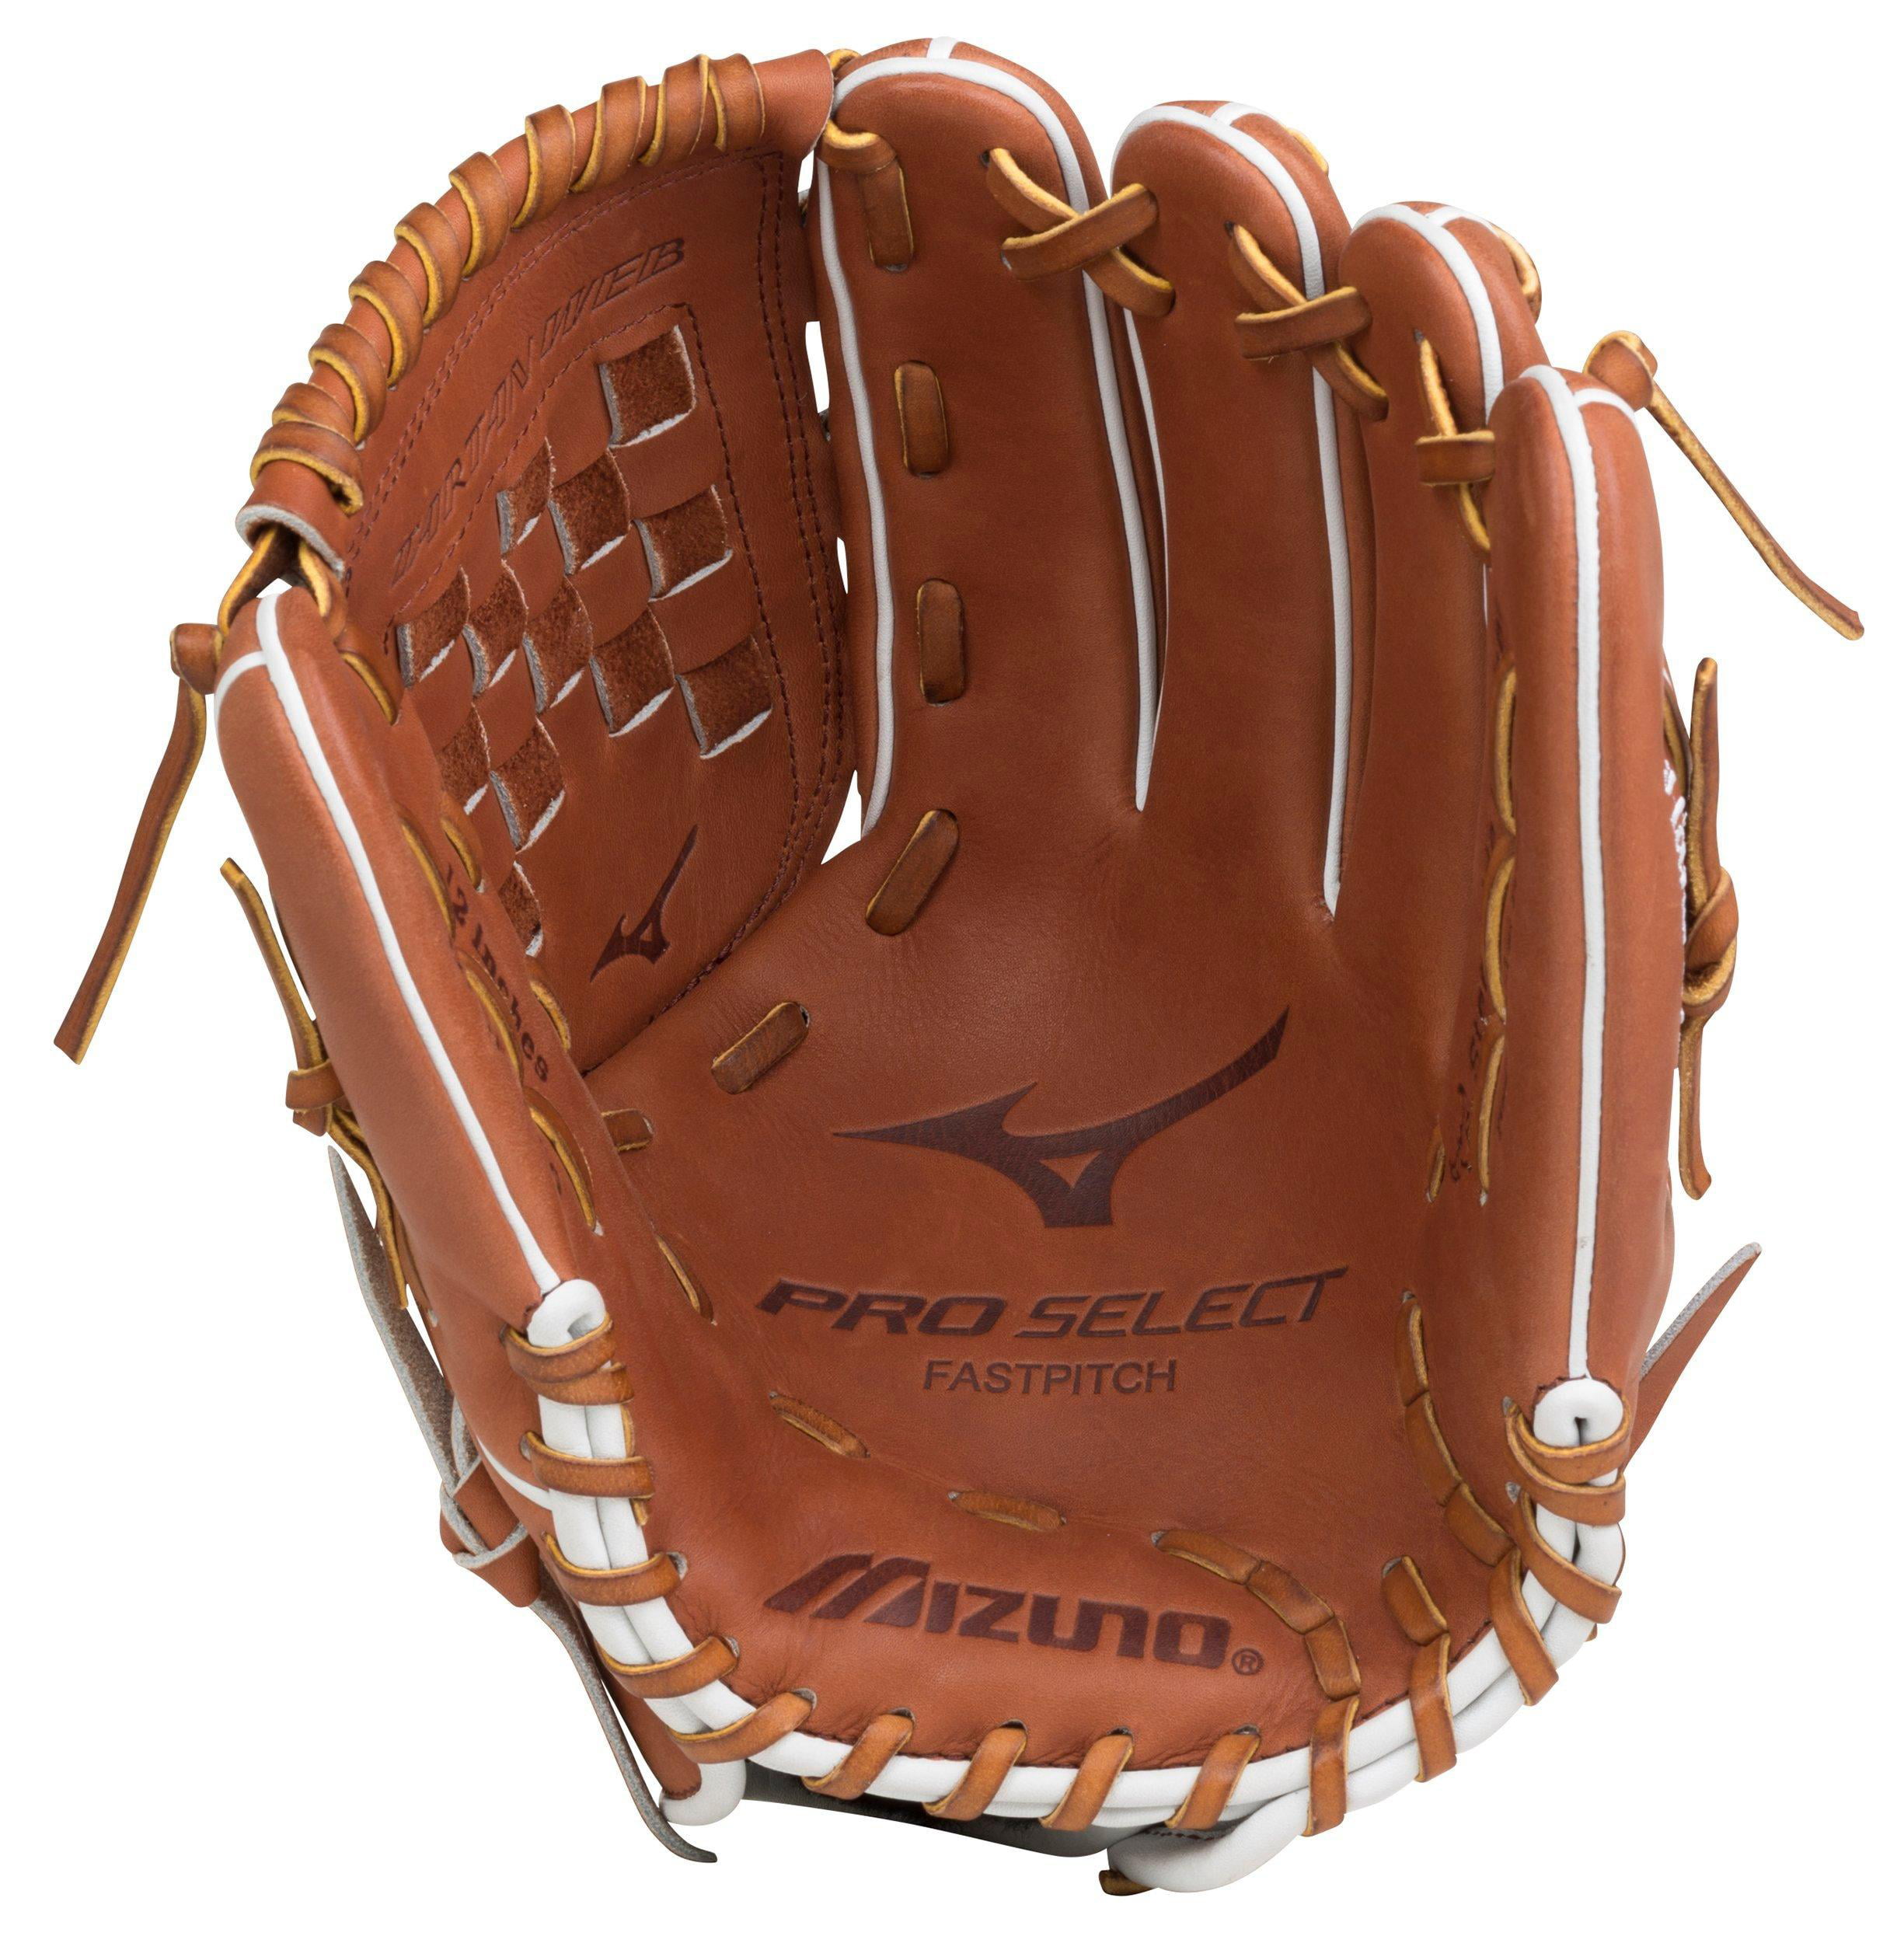 Mizuno Pro Select Fastpitch Softball Glove Series 